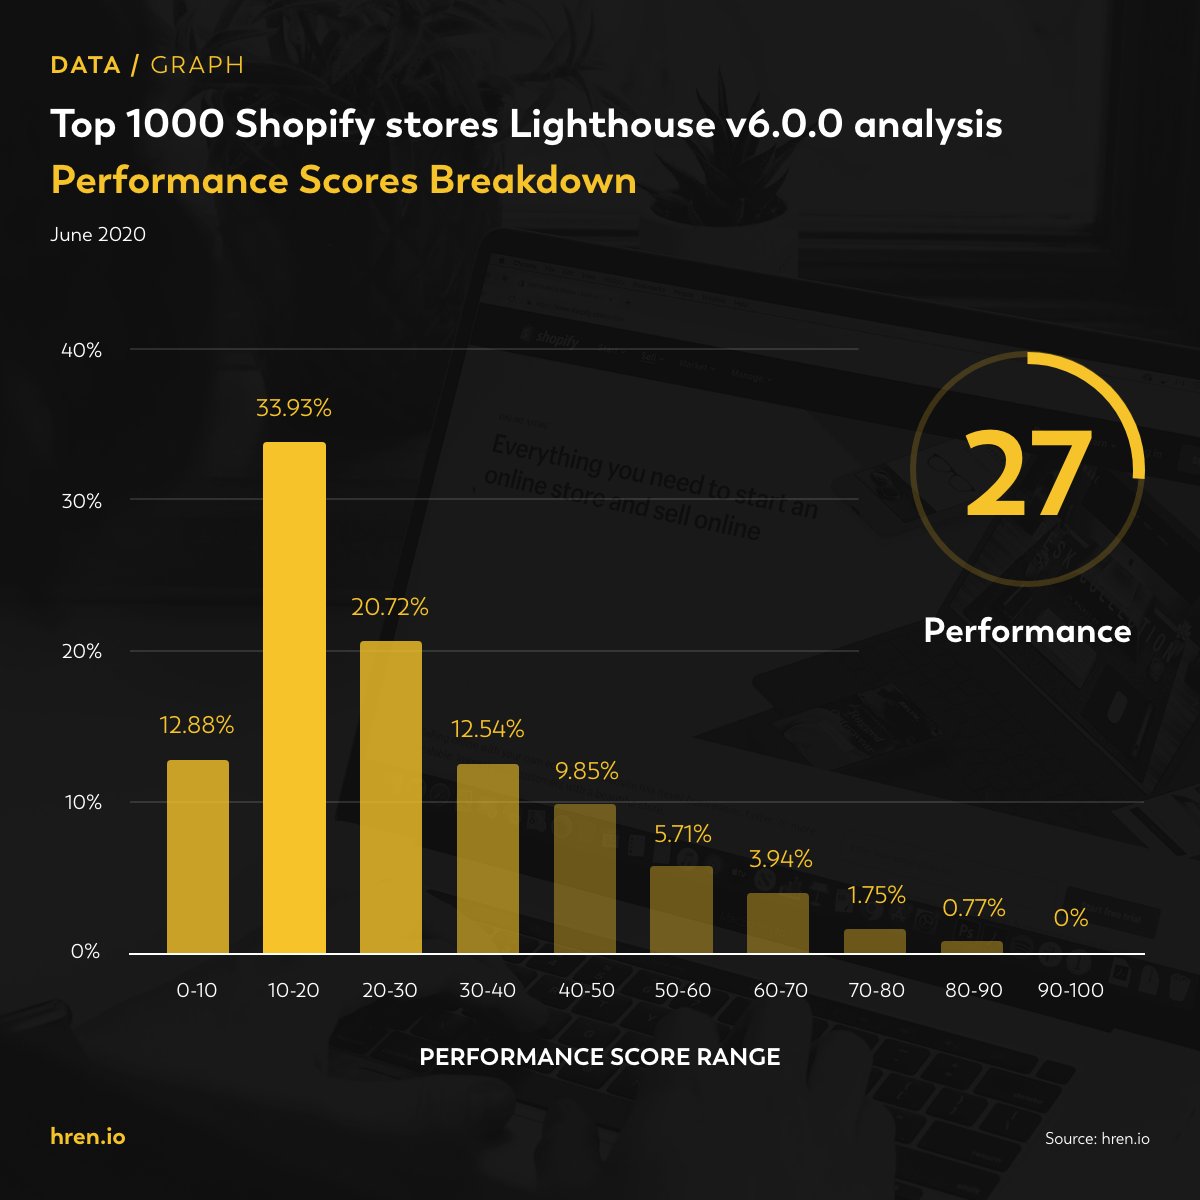 Top 1000 Shopify Performance Breakdown